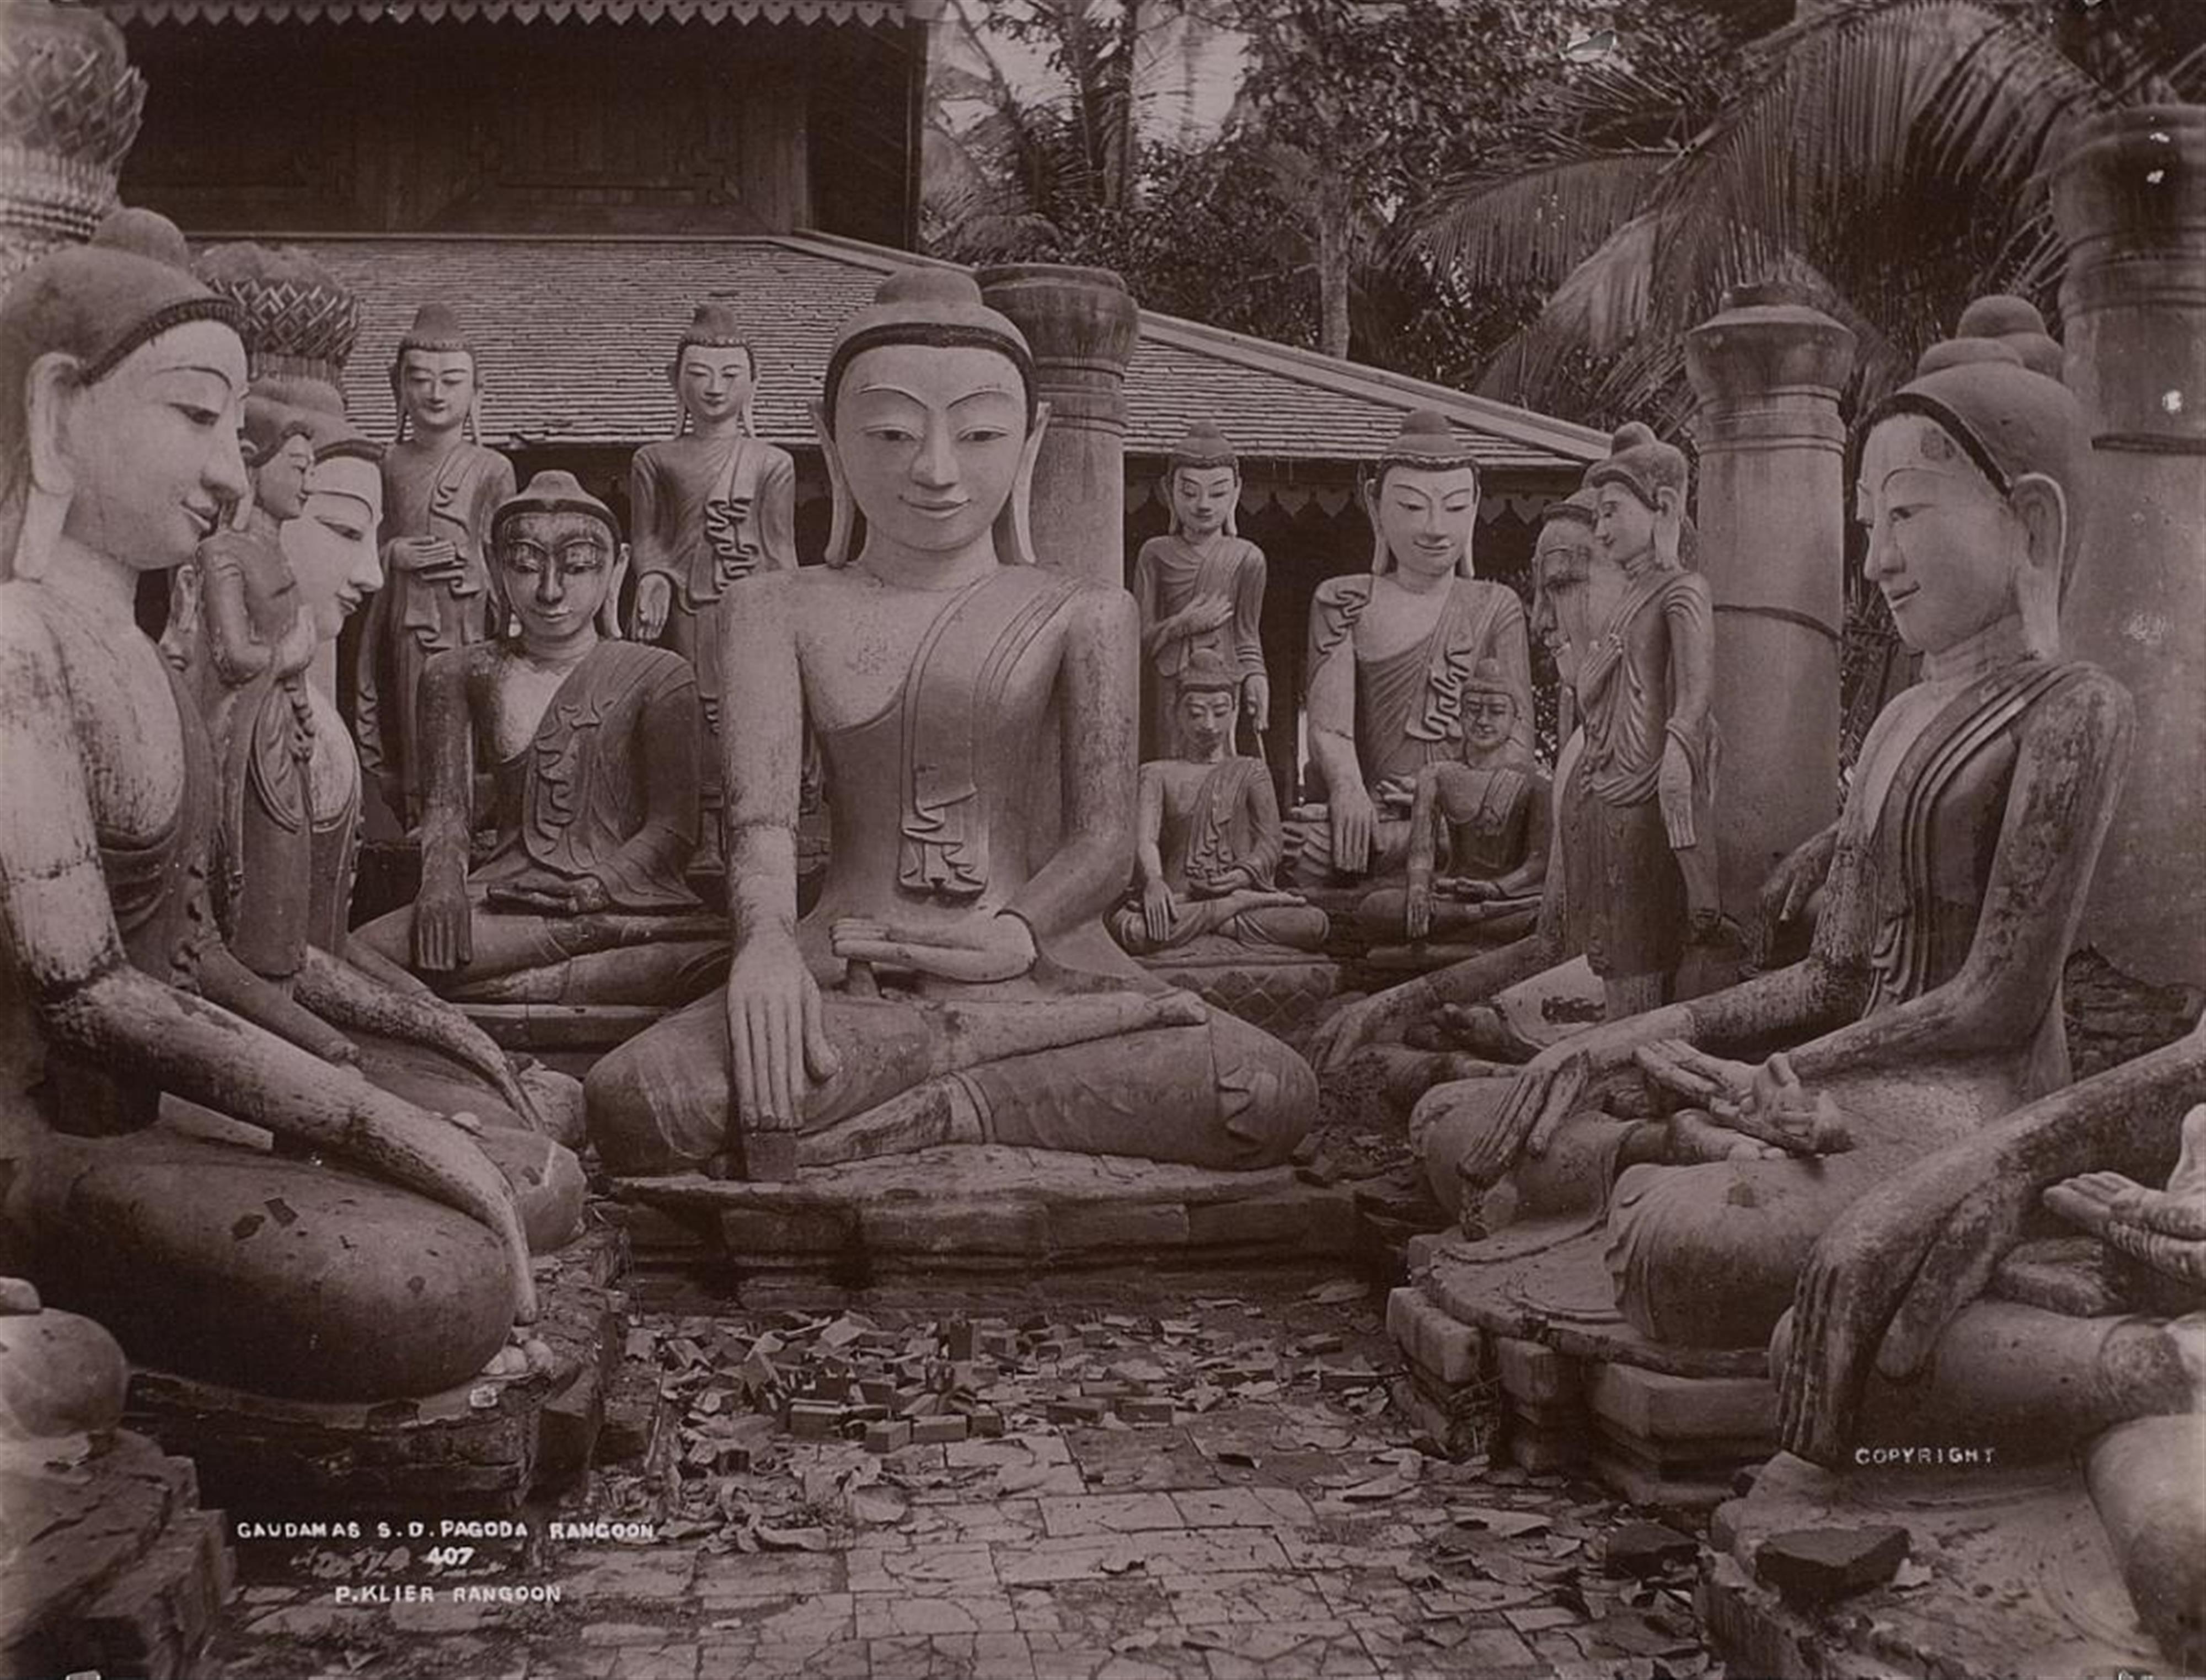 Adolphe Philip Klier - Untitled (Views of Burma) - image-6